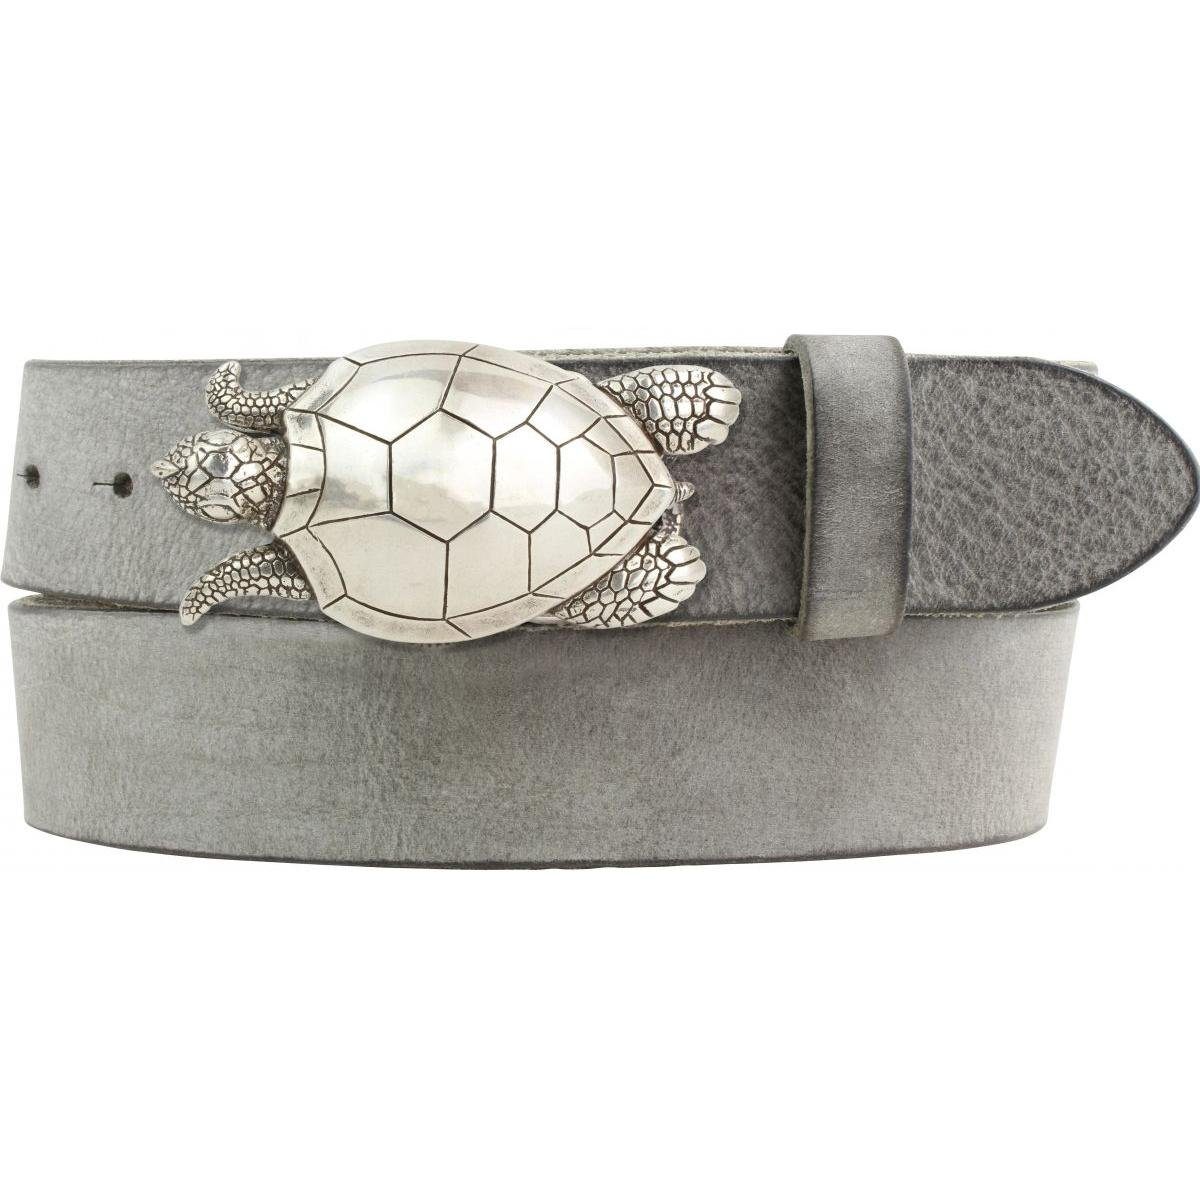 BELTINGER Ledergürtel Gürtel mit Schildkröte-Gürtelschnalle aus weichem Vollrindleder 4 cm U Dunkelgrau, Silber